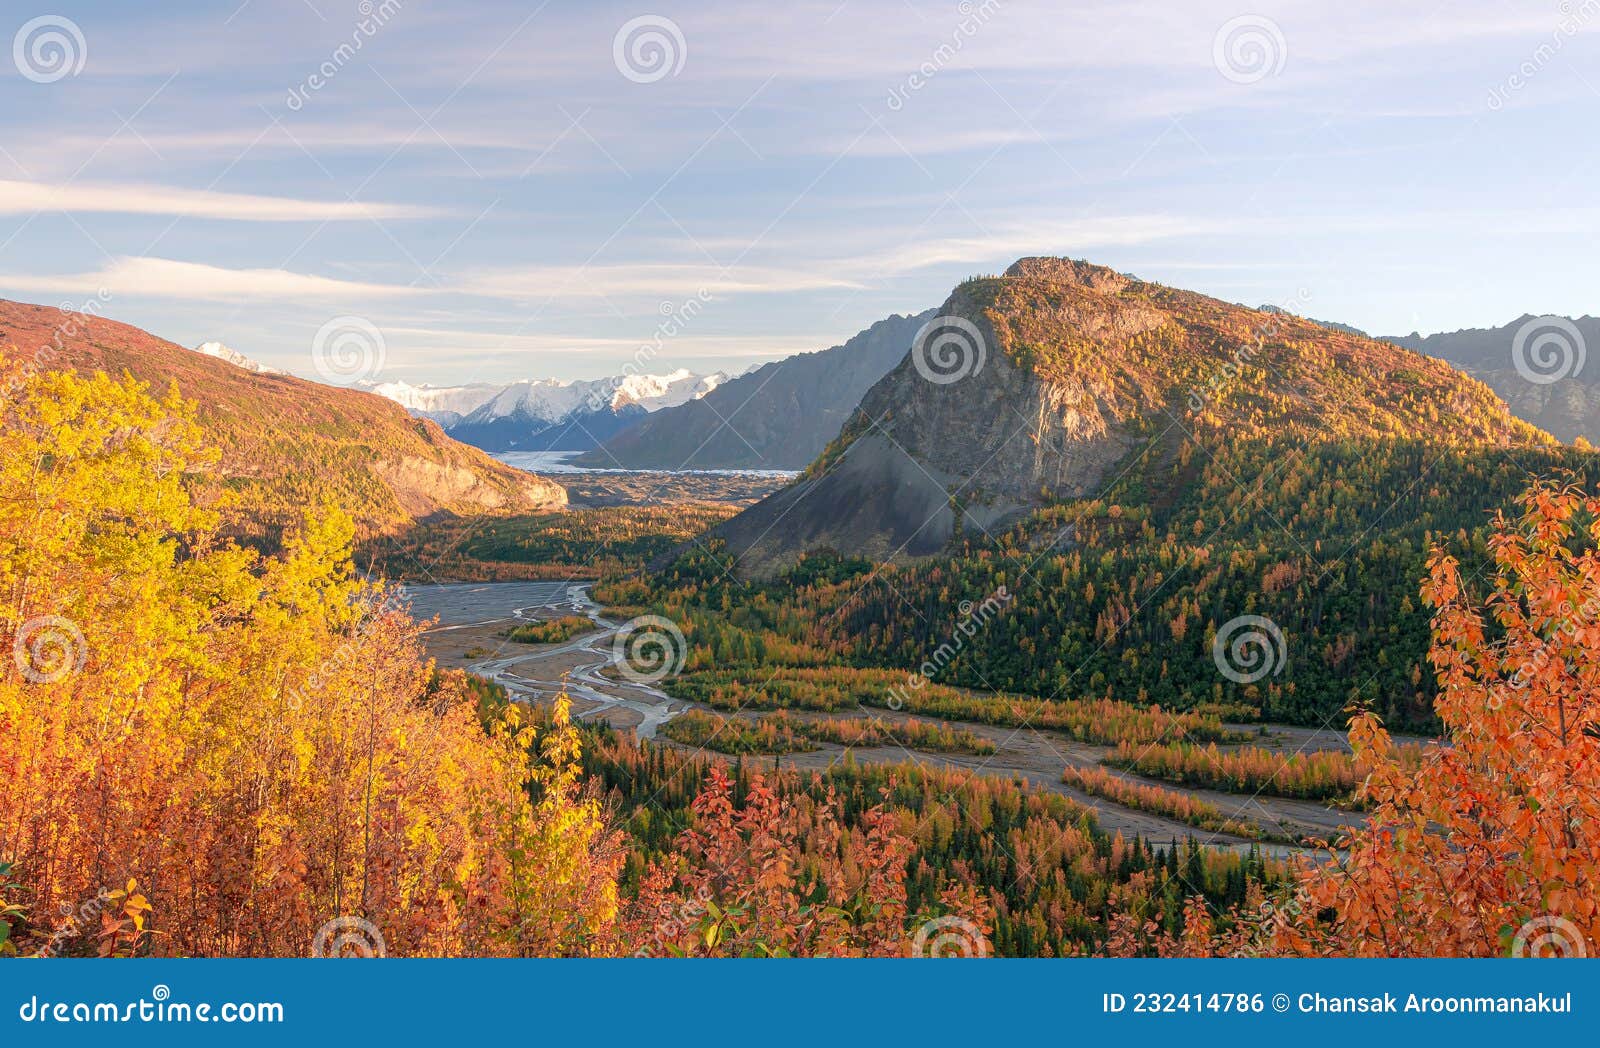 view of matanuska river from highway , alaska in fall season.